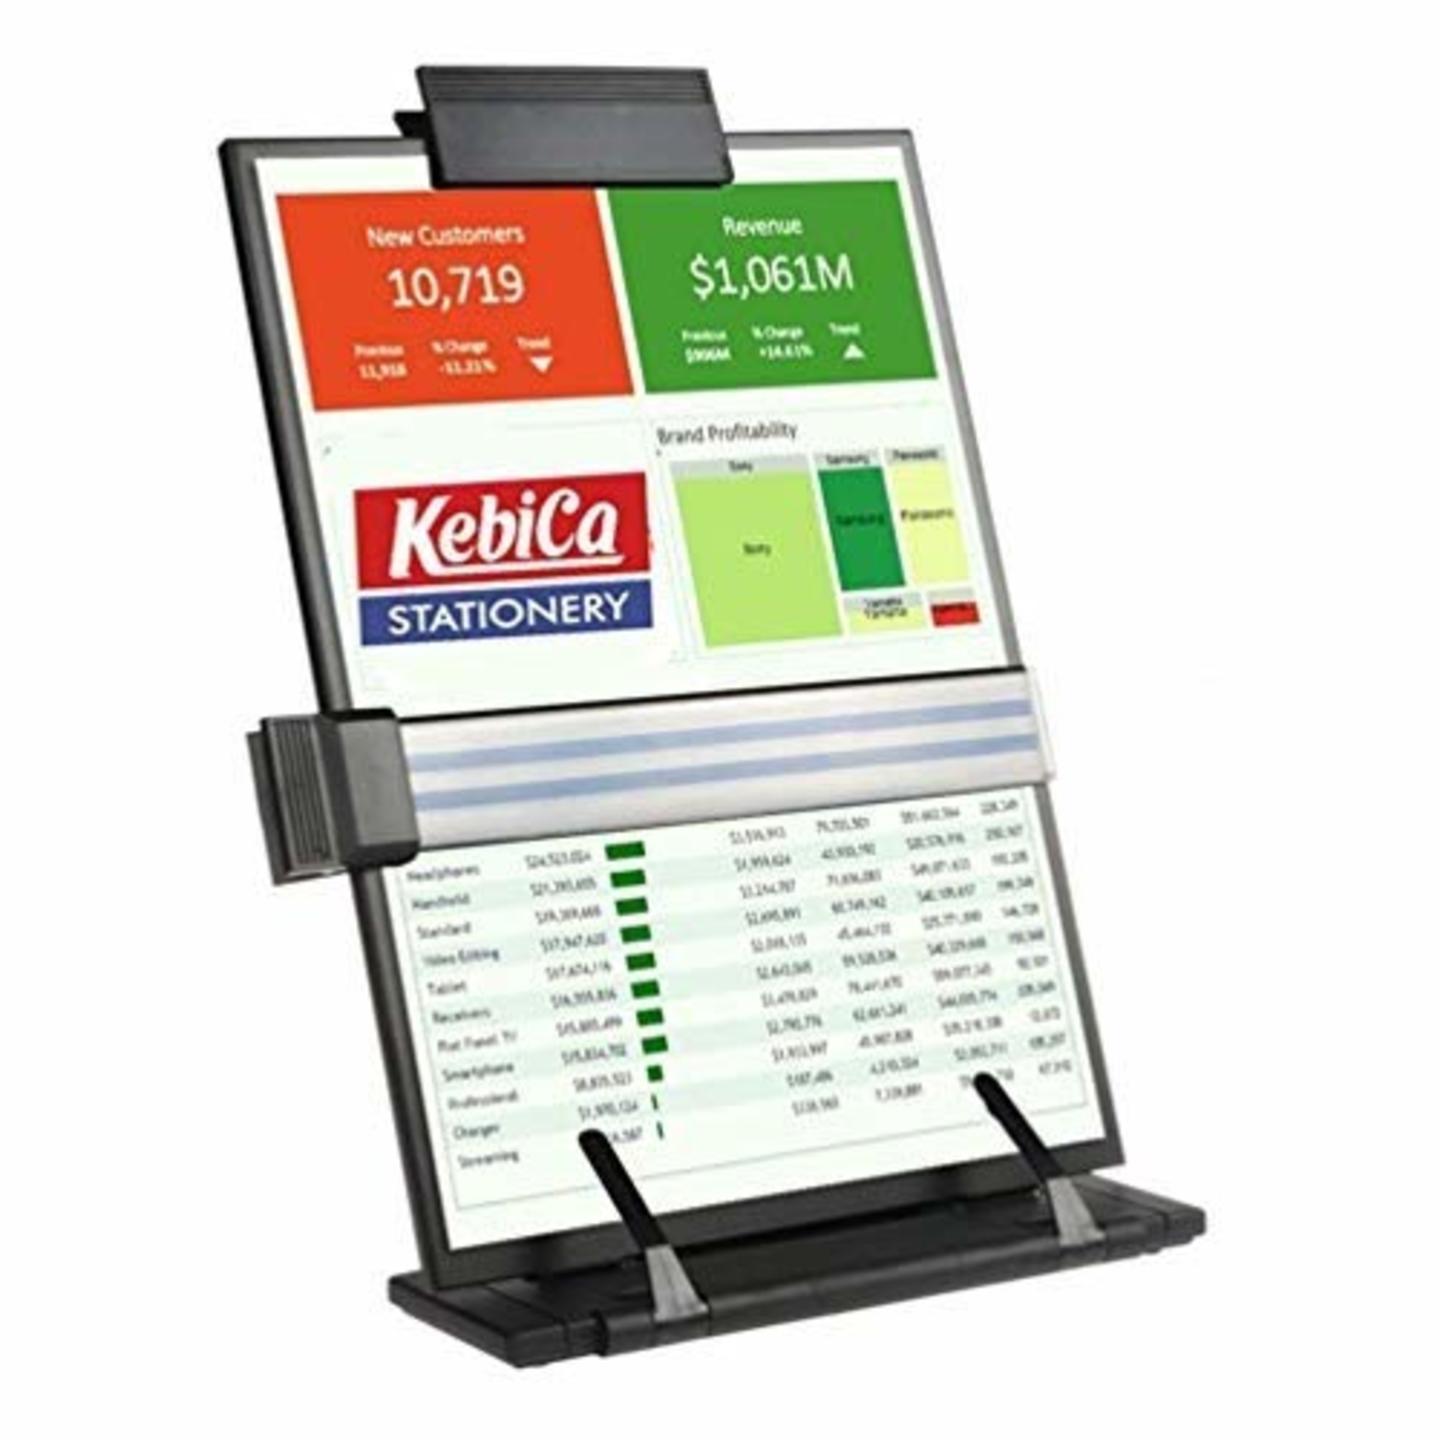 Kebica Metal Desktop Document Holder with 7 Adjustable Positions, Adjustable Clip, Holds A4 Documents, Books, iPad Tablet.